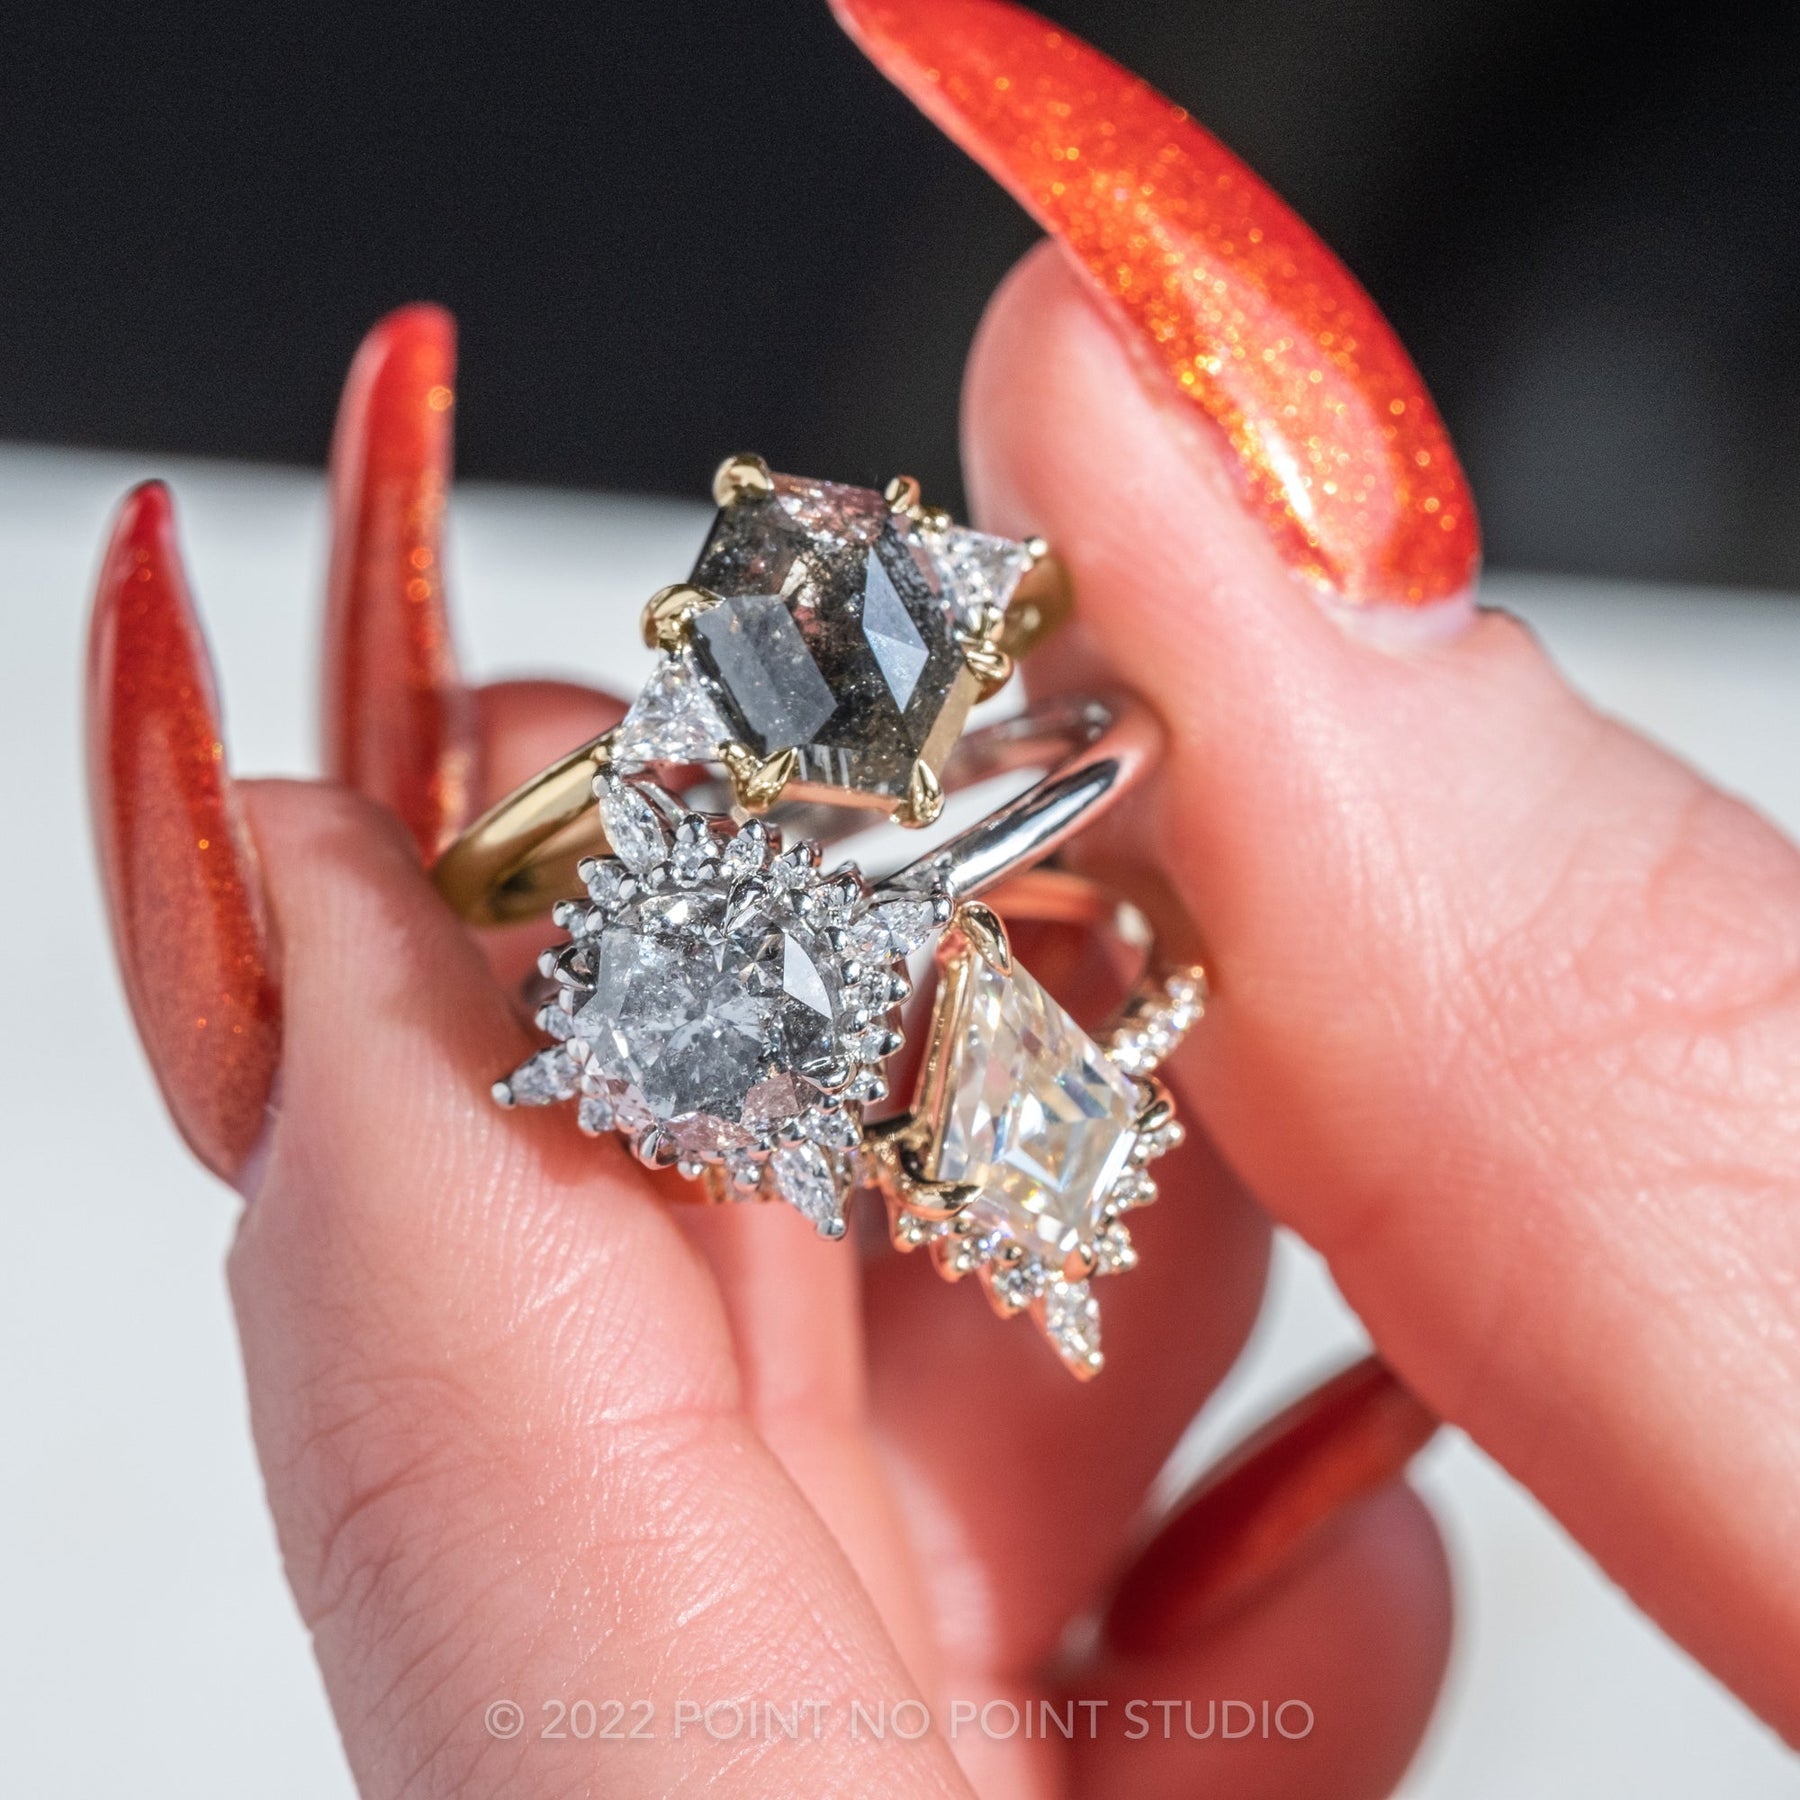 Black Diamond Engagement Ring, Point No Point Studio 3